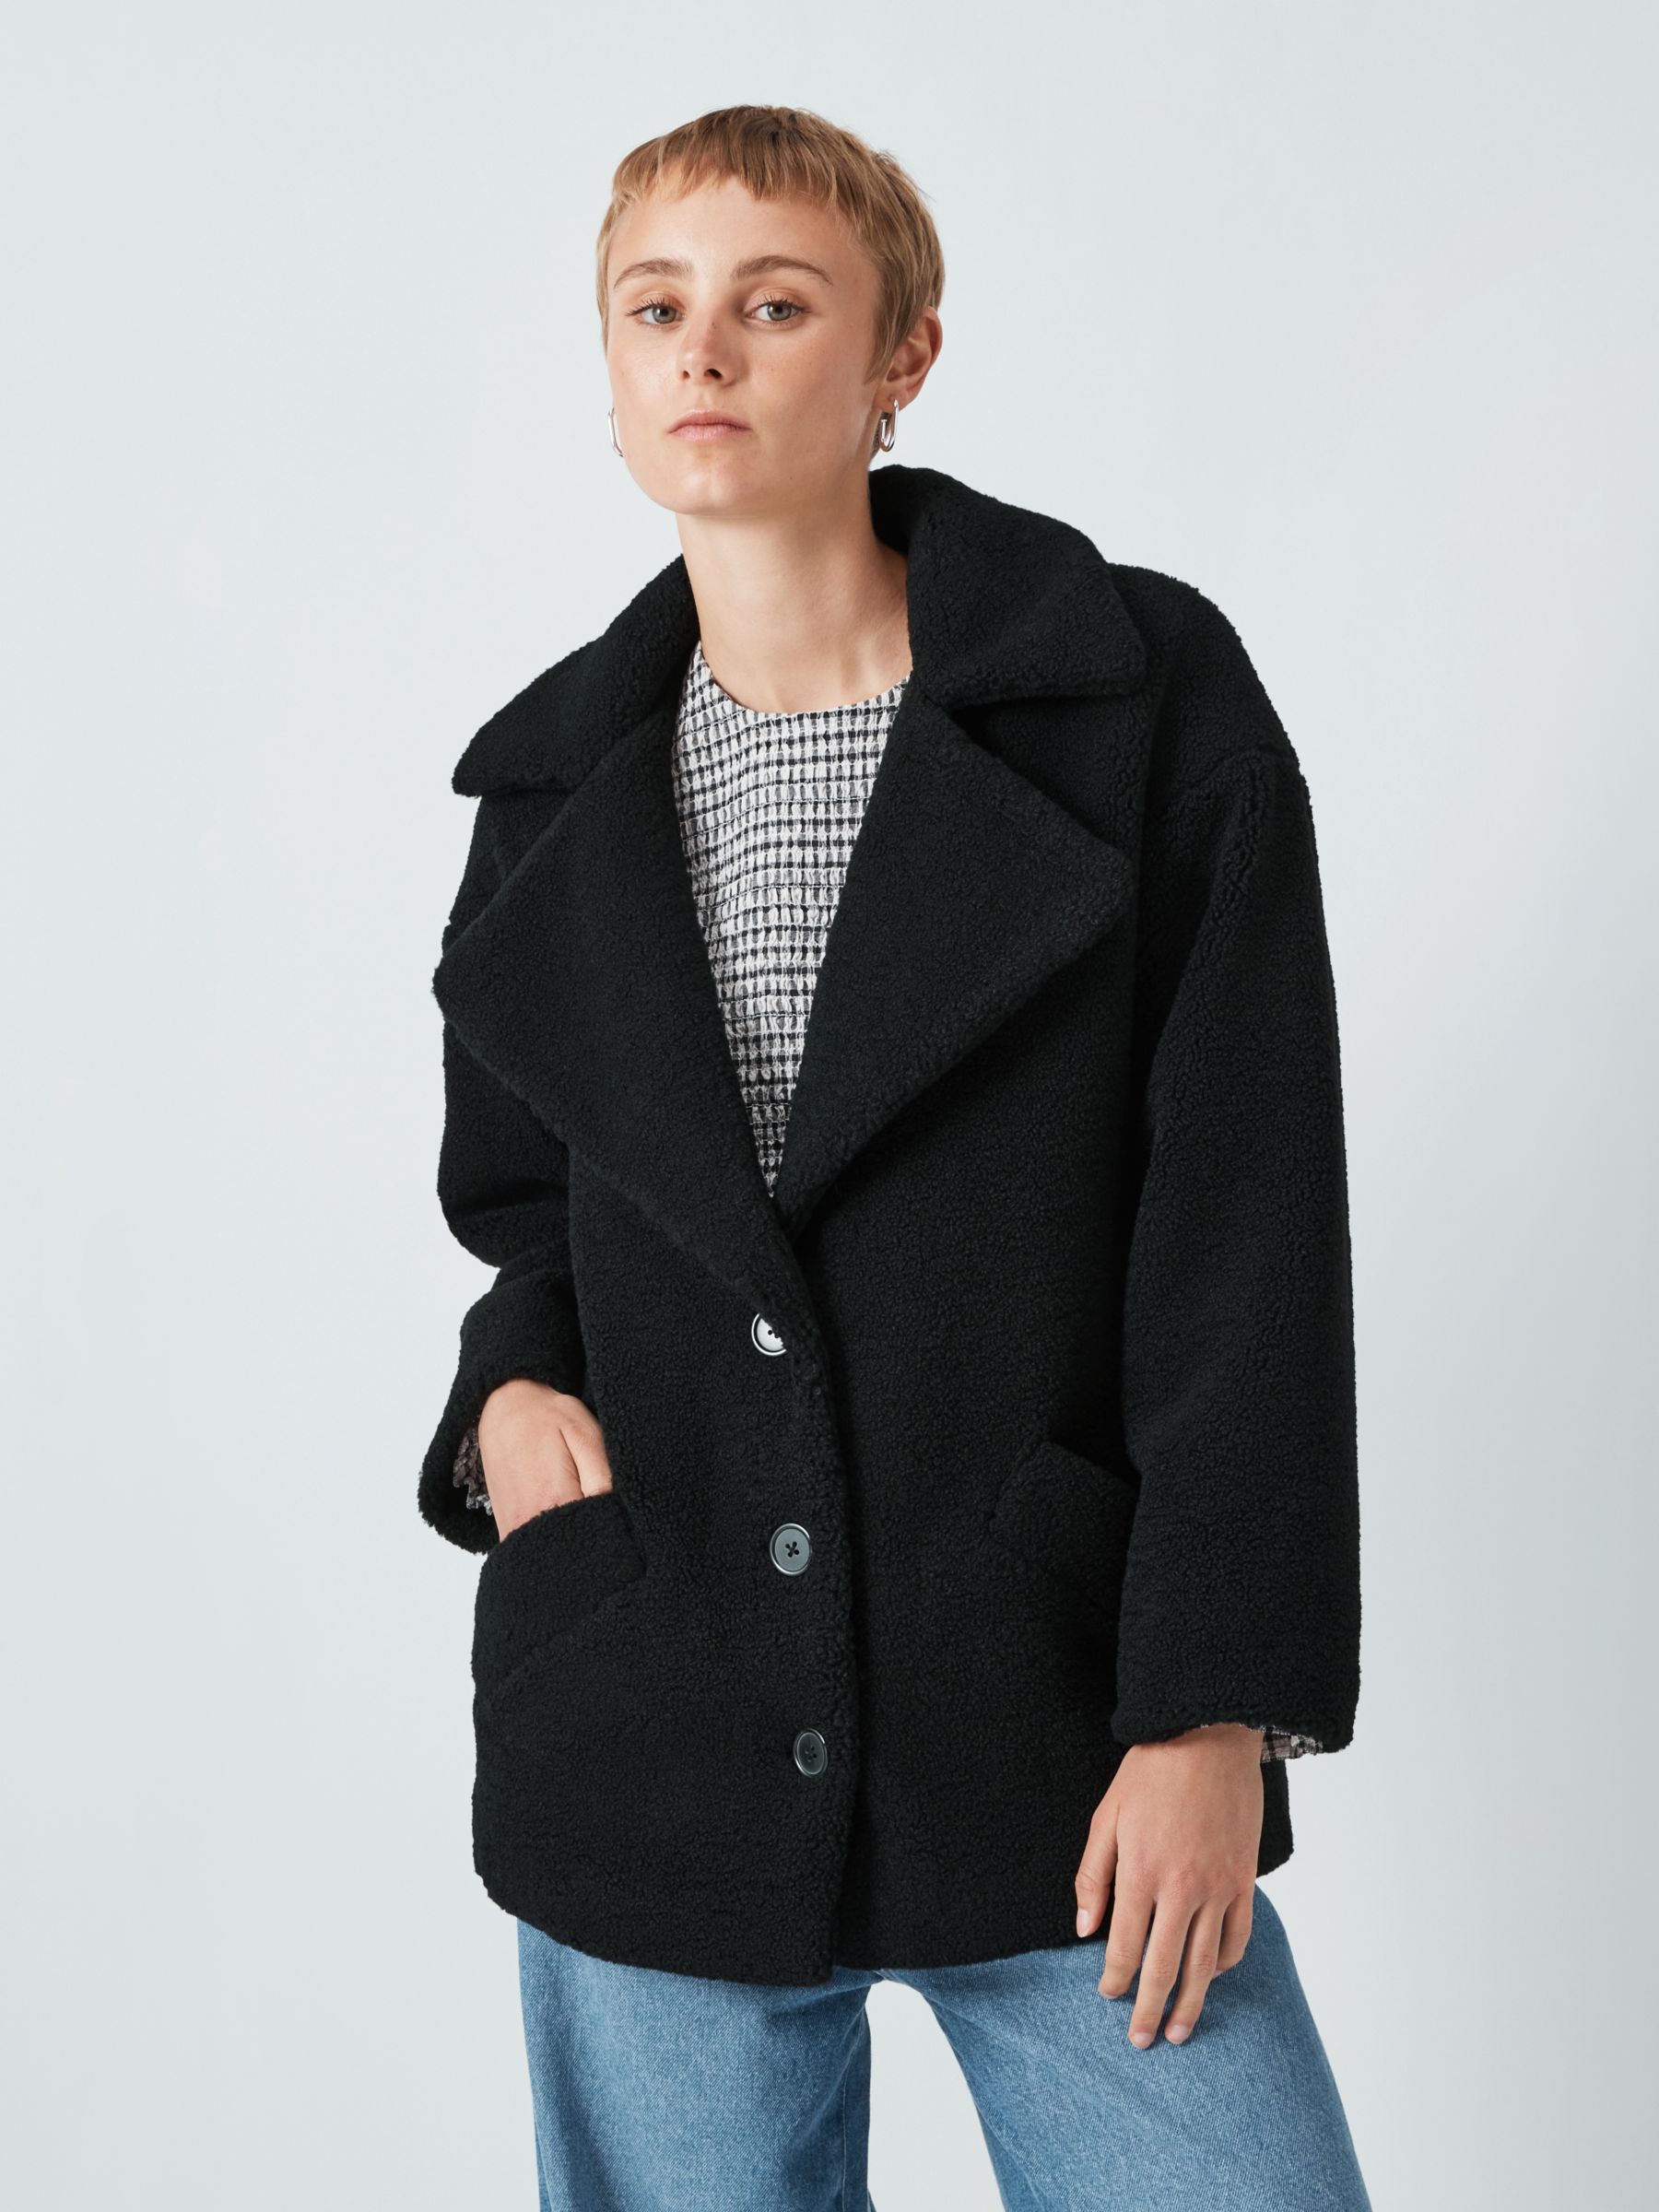 John Lewis ANYDAY Plain Faux Fur Coat, Black, XS